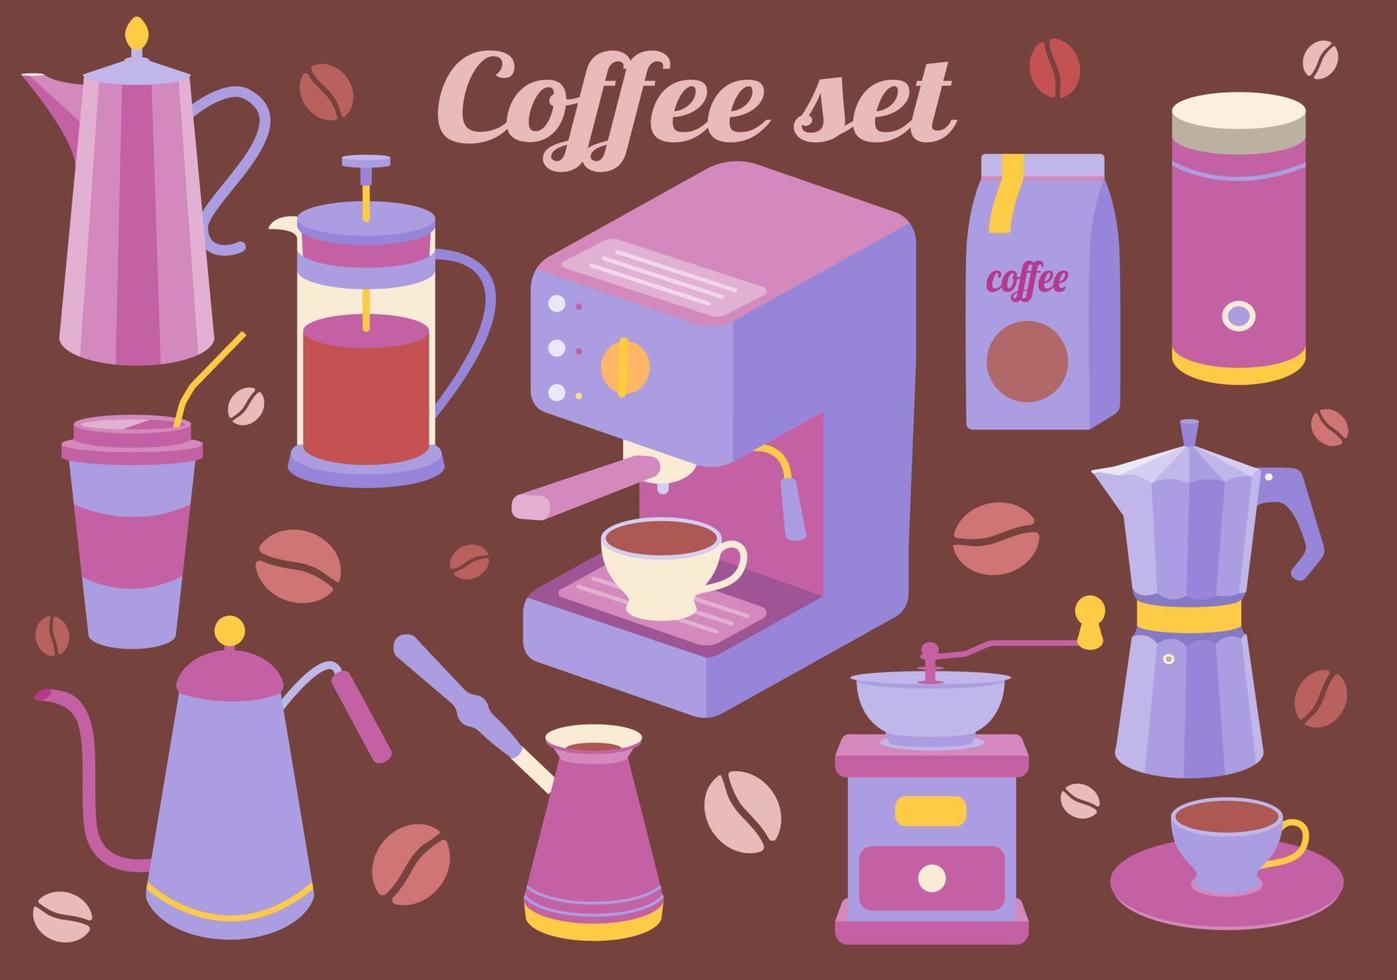 juego de café de accesorios de cocina para hacer bebidas. cafetera, prensa francesa, olla, cafetera, molinillo, granos. ilustración vectorial vector